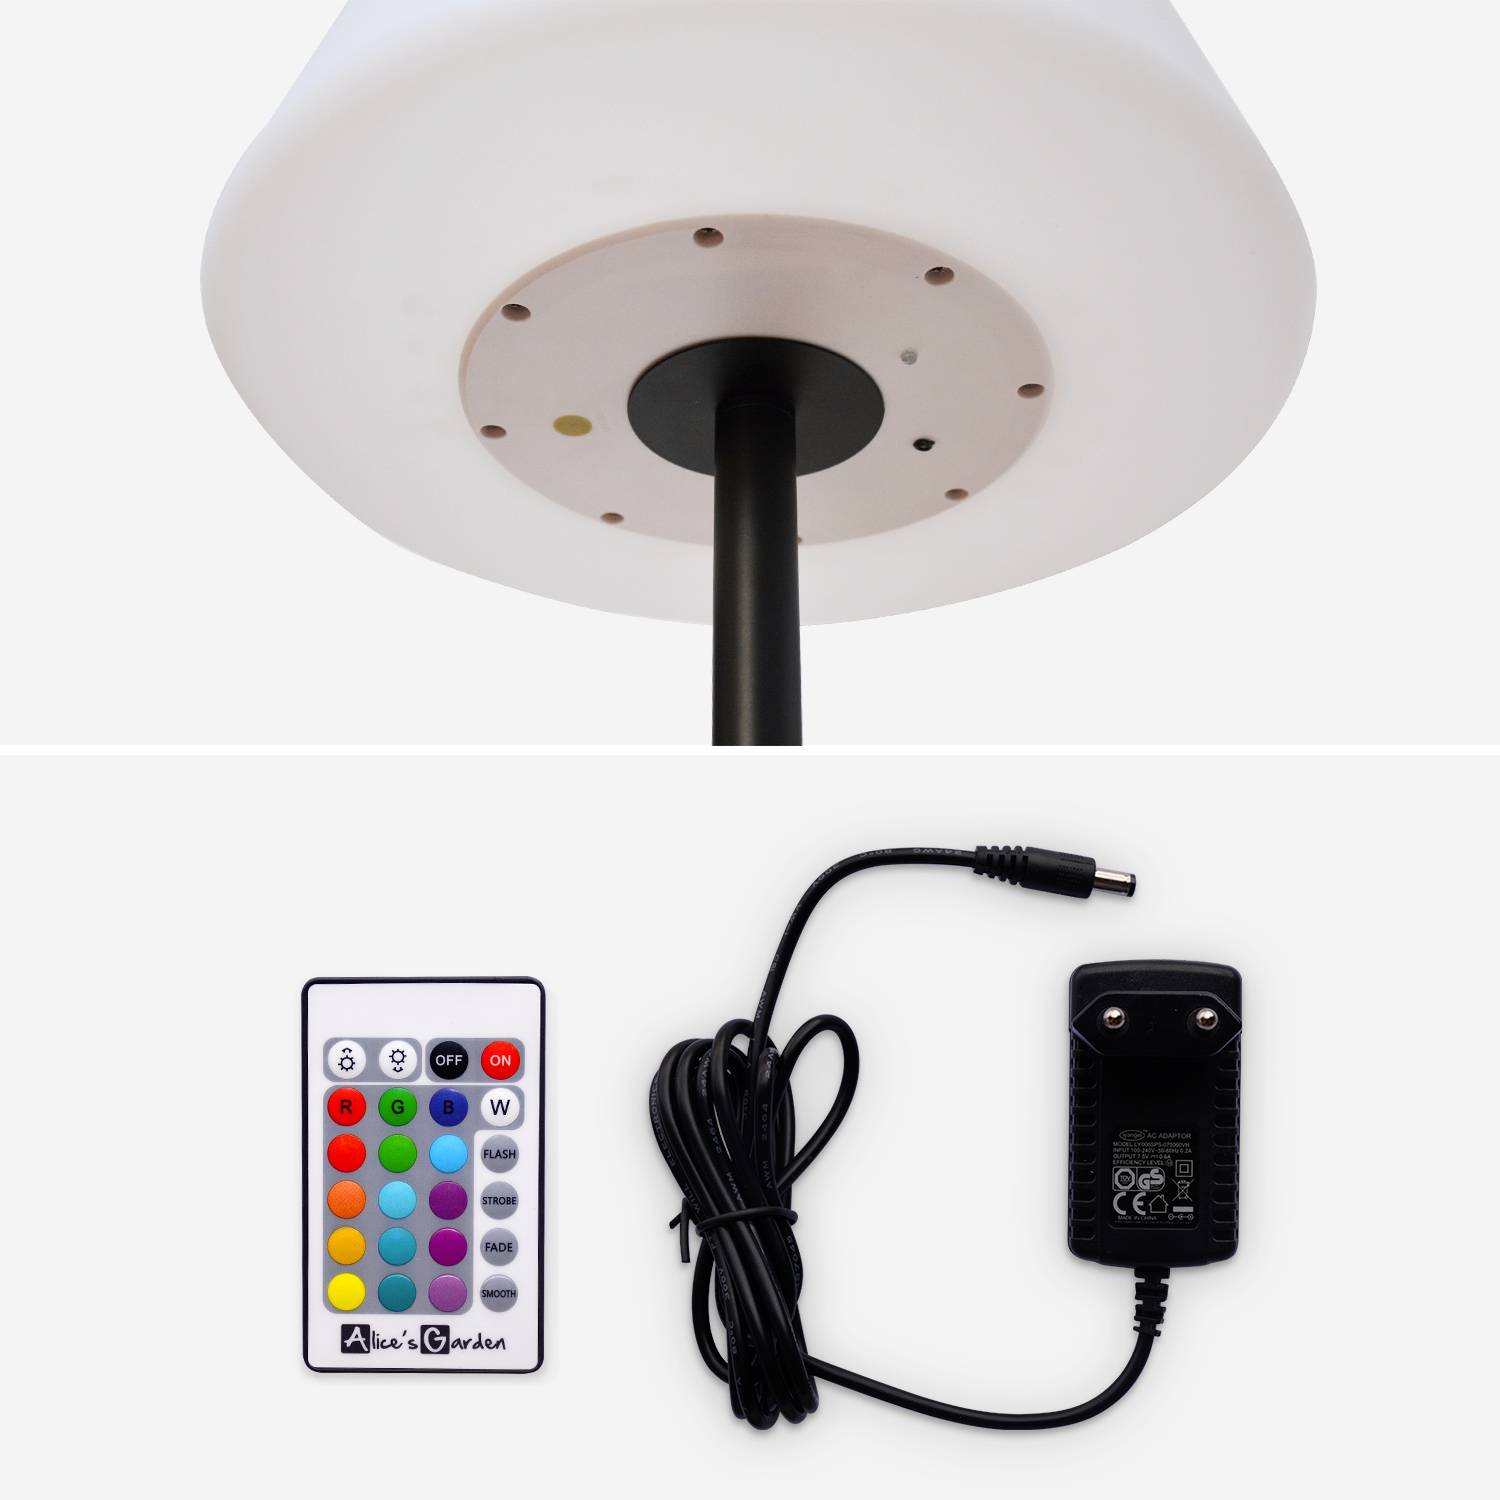 Staande lamp voor buiten 150 cm LAMPADA XL LED hybride, multicolor staande lamp, design op batterij, zonne-energie, afstandsbediening Photo4